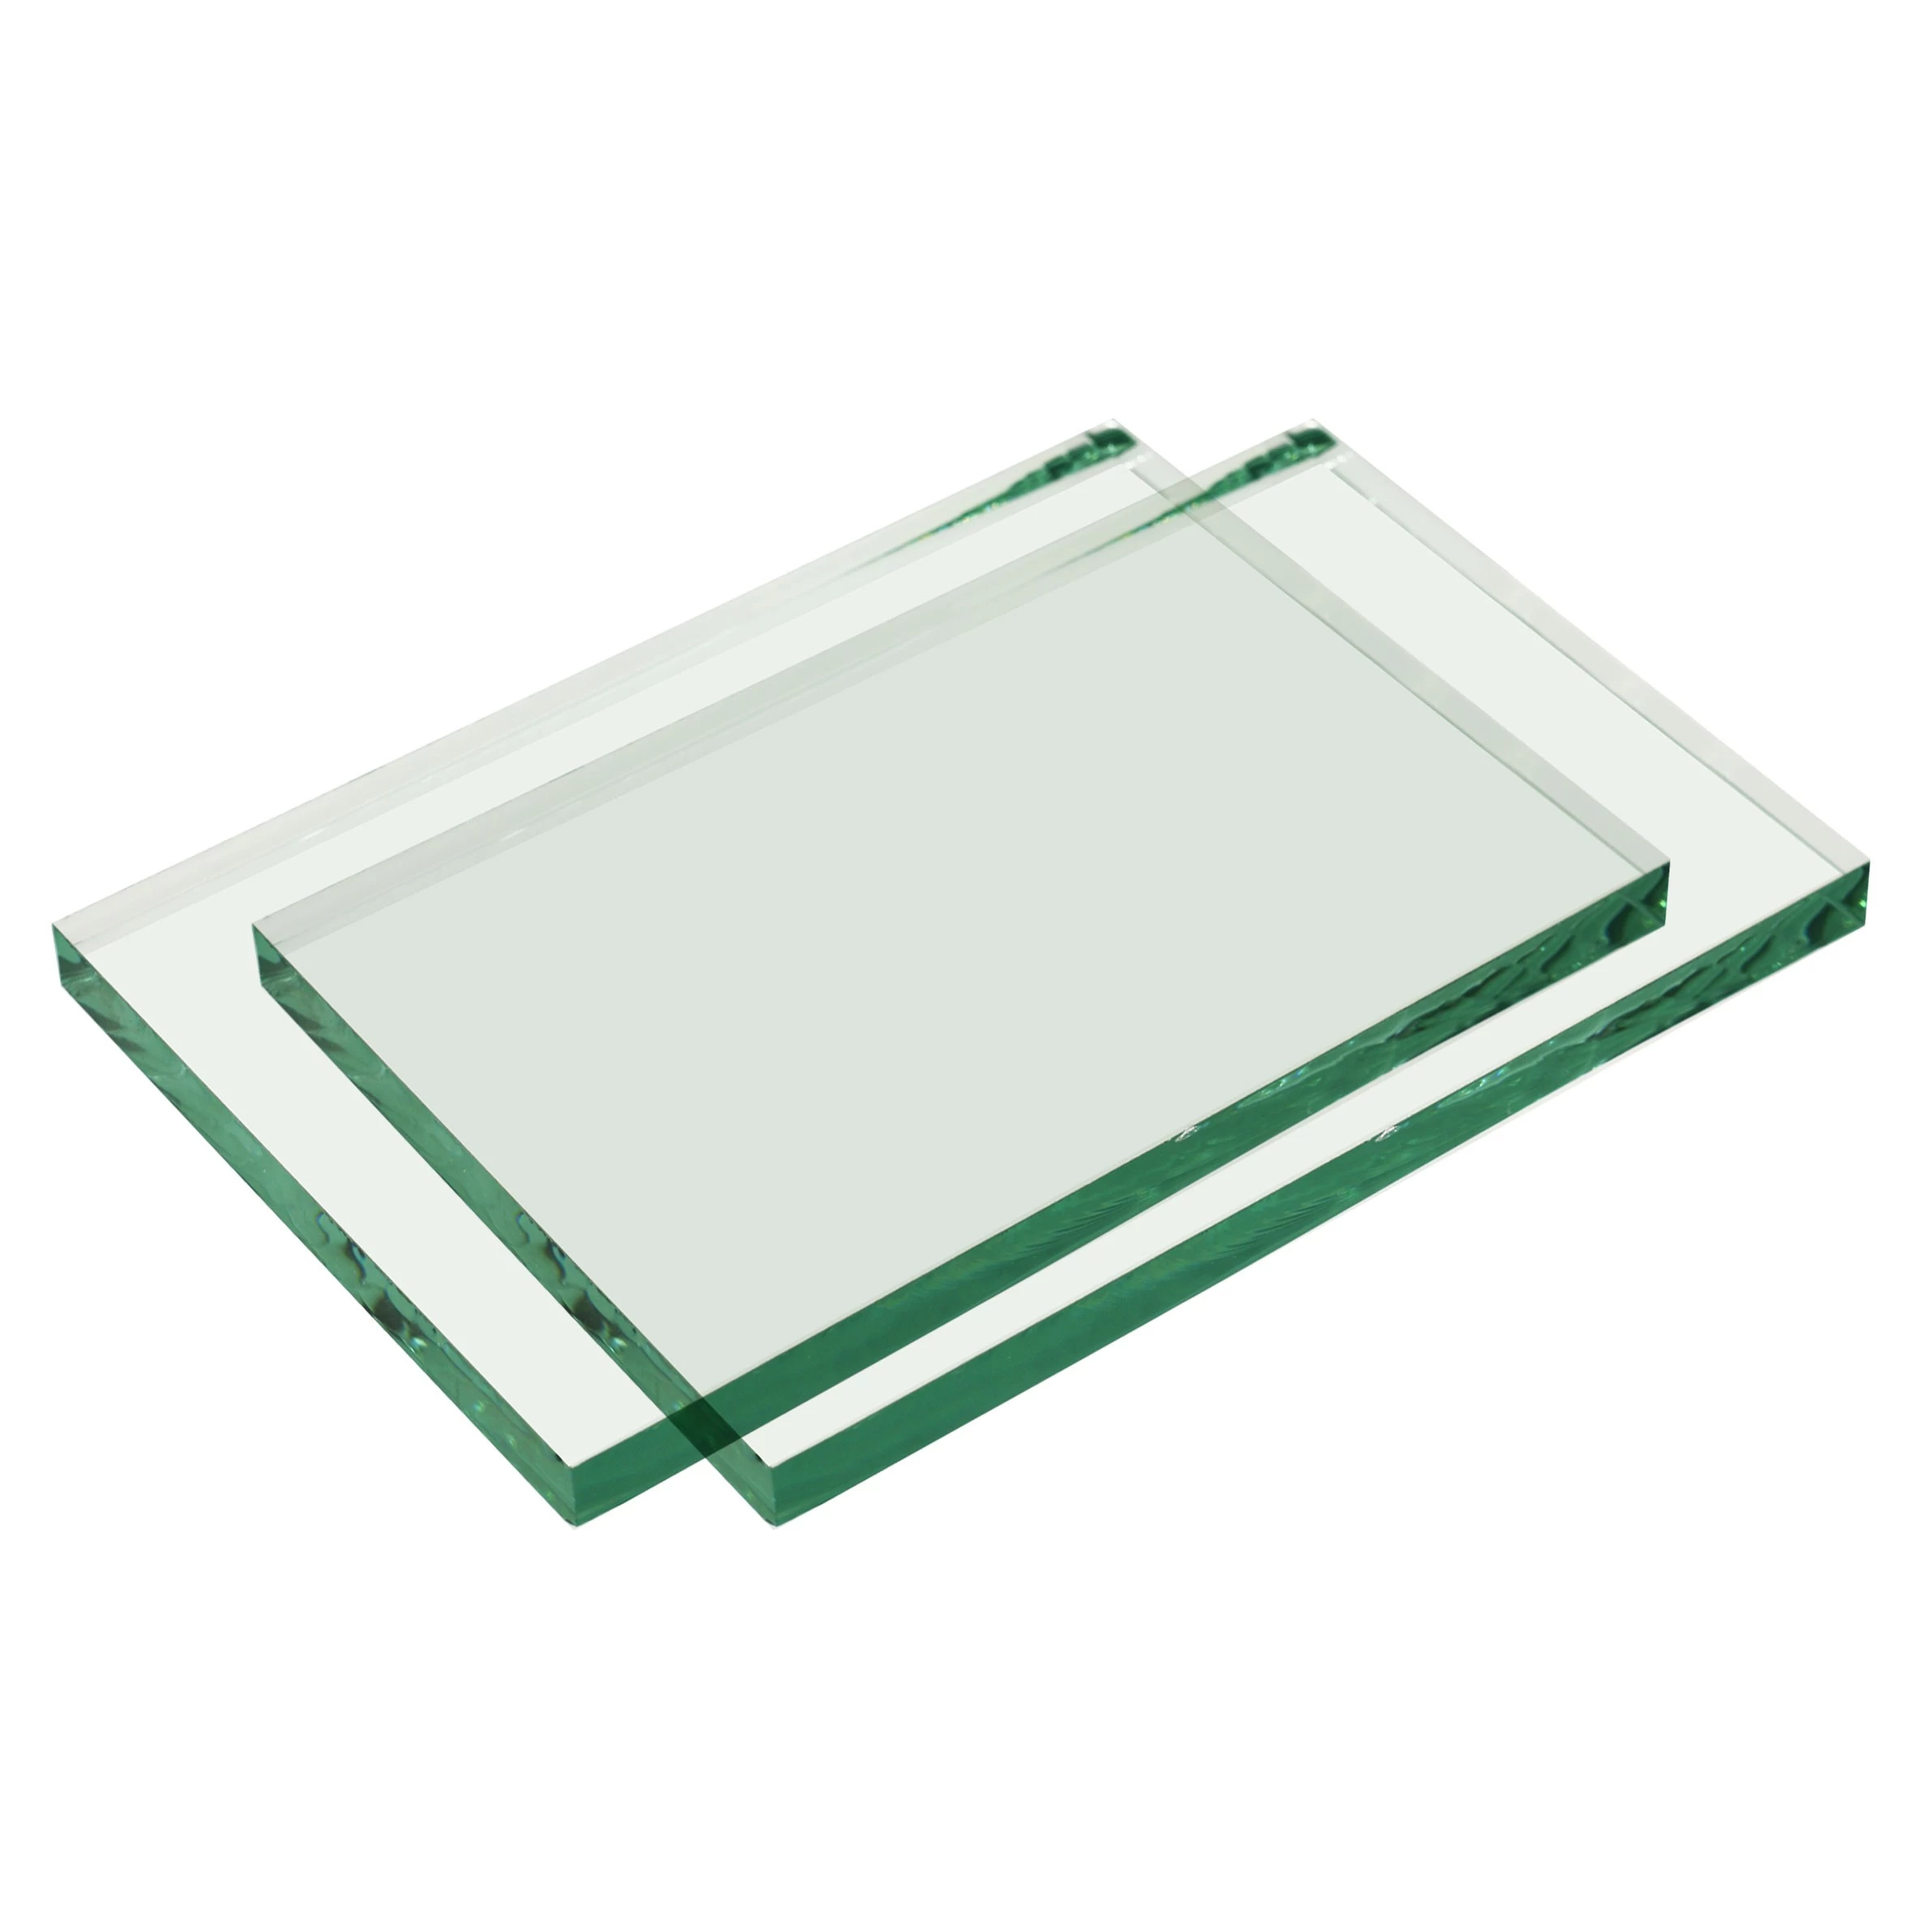 10mm clear glass sheet